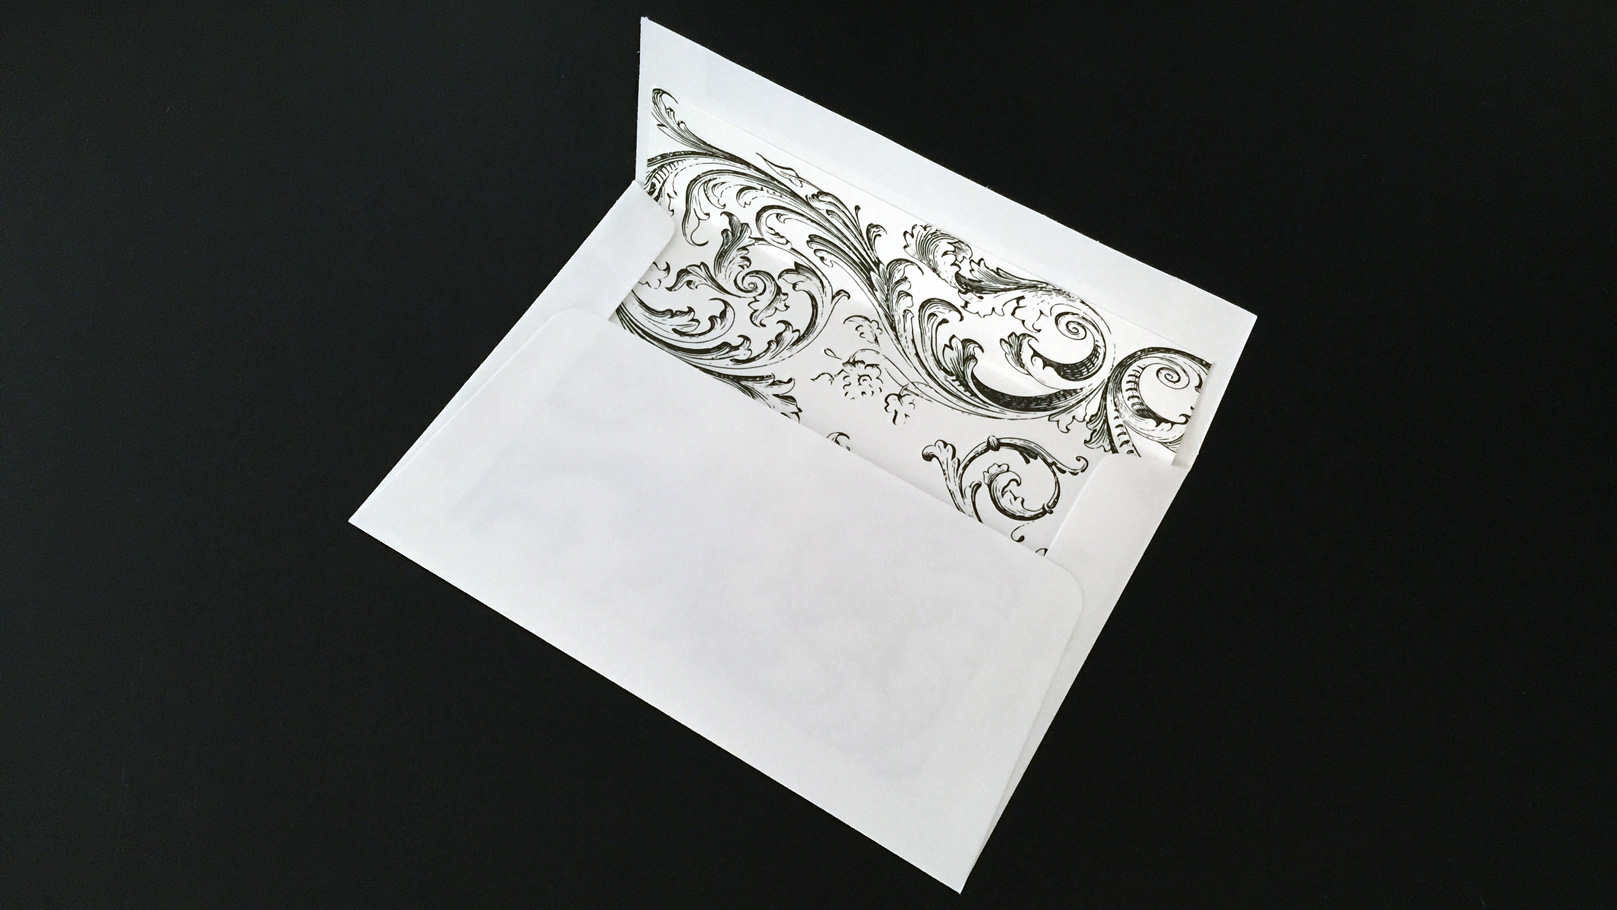 fingerprint design's photo of the envelope for Christopher's illustrated stationery